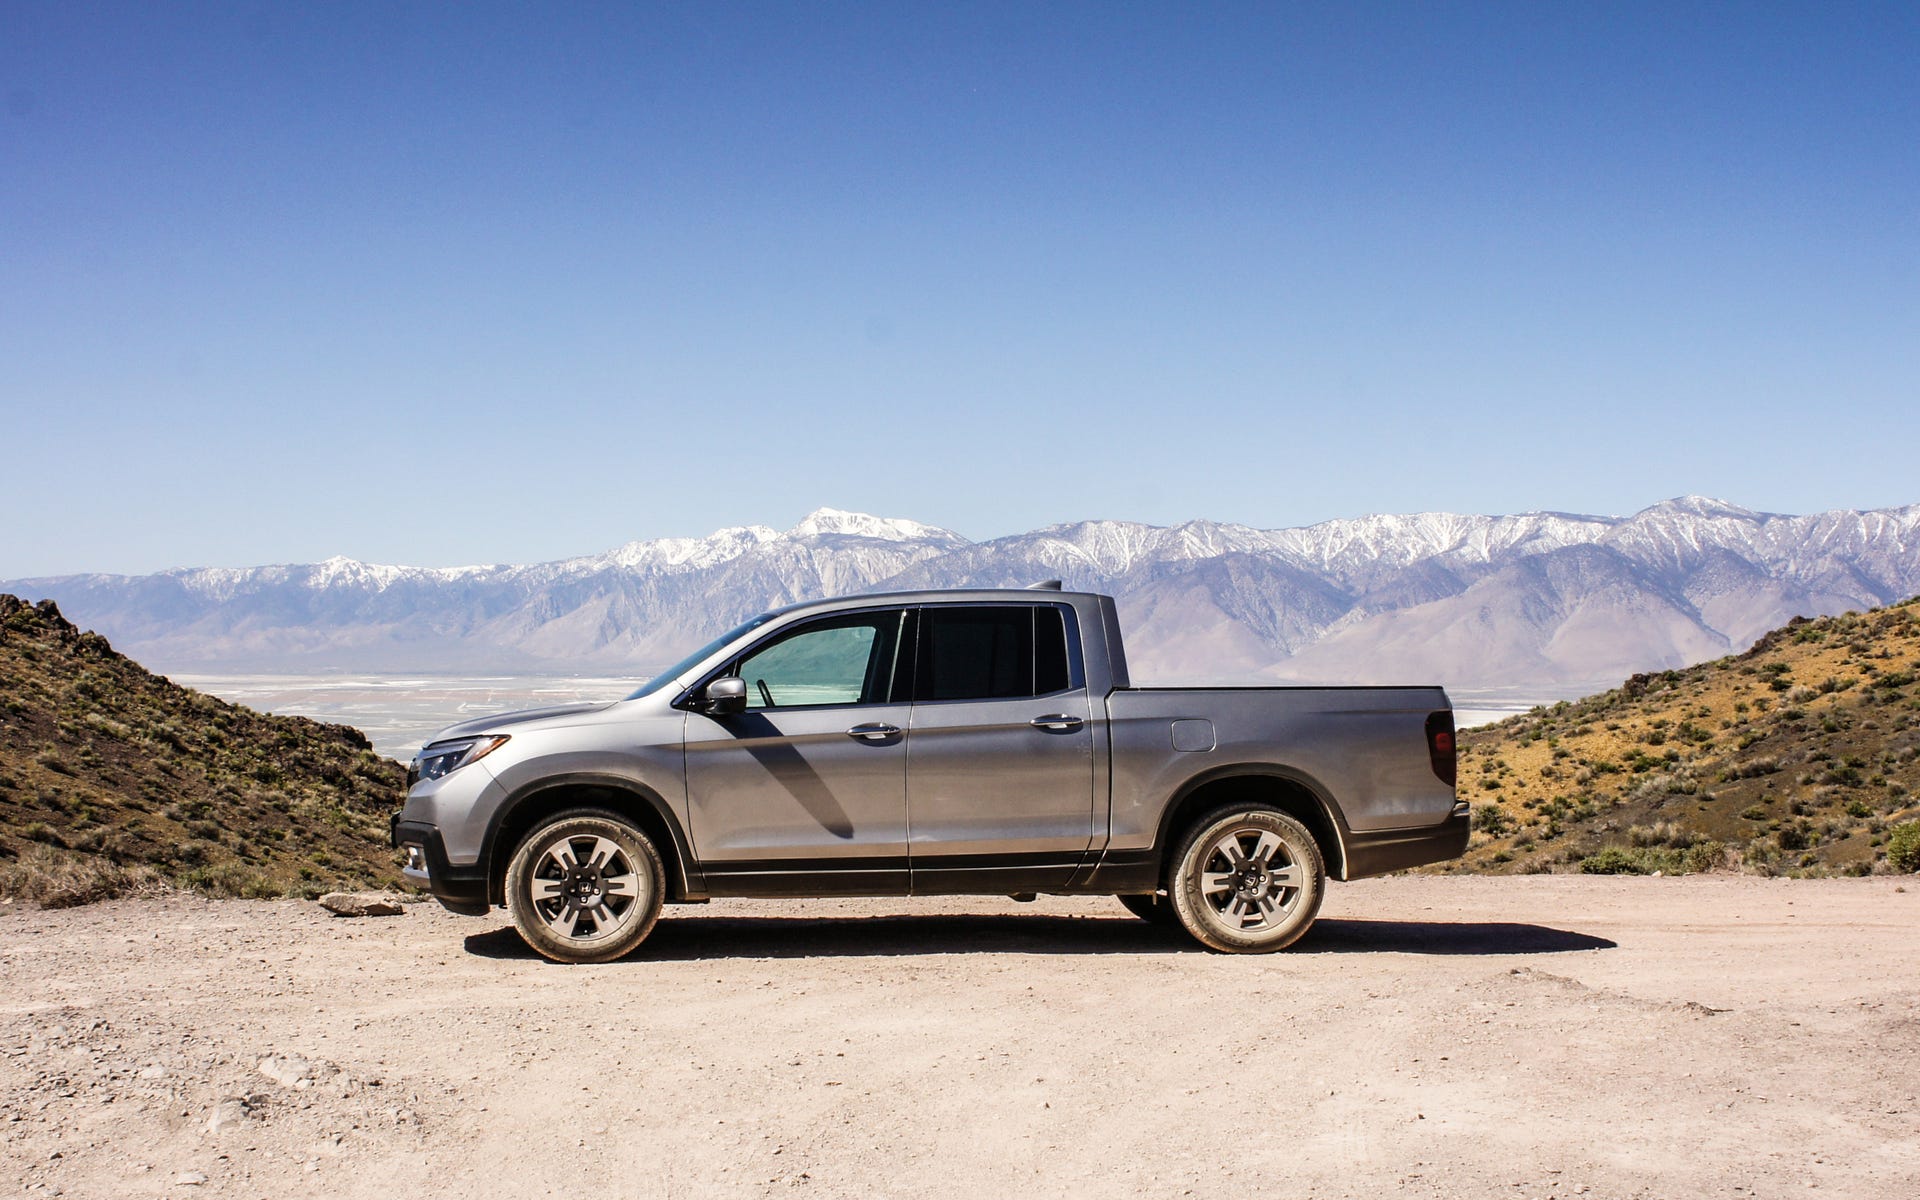 2017 Honda Ridgeline - Death Valley